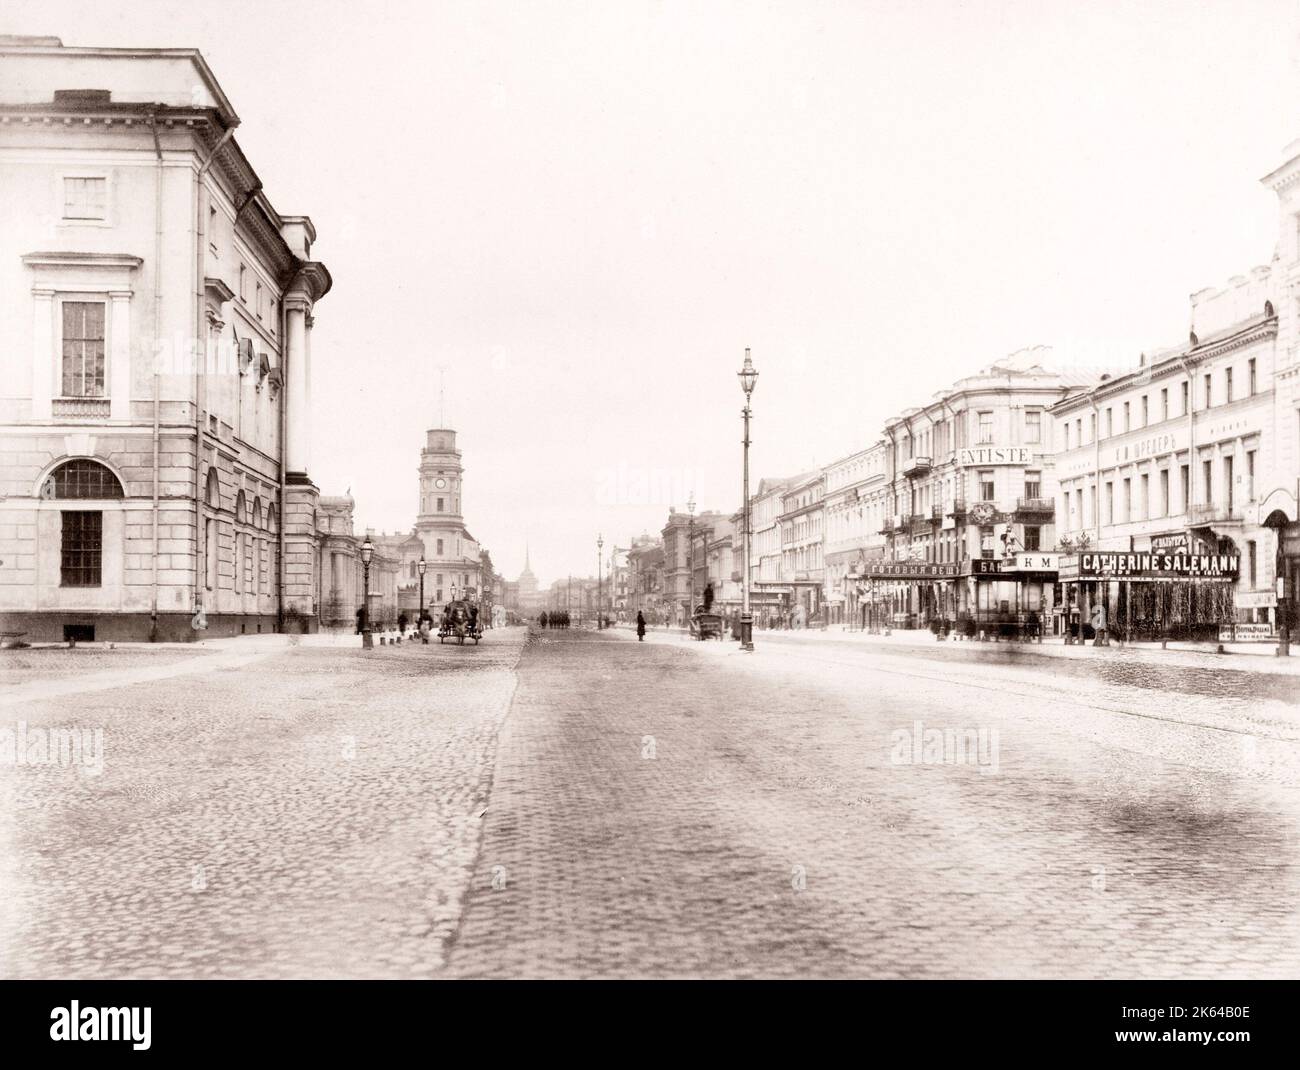 19th century vintage photograph Russia - Nevsky Prospect, the main street in the city of St. Petersburg, Russia, named after the 13th-century Russian prince Alexander Nevsk Stock Photo